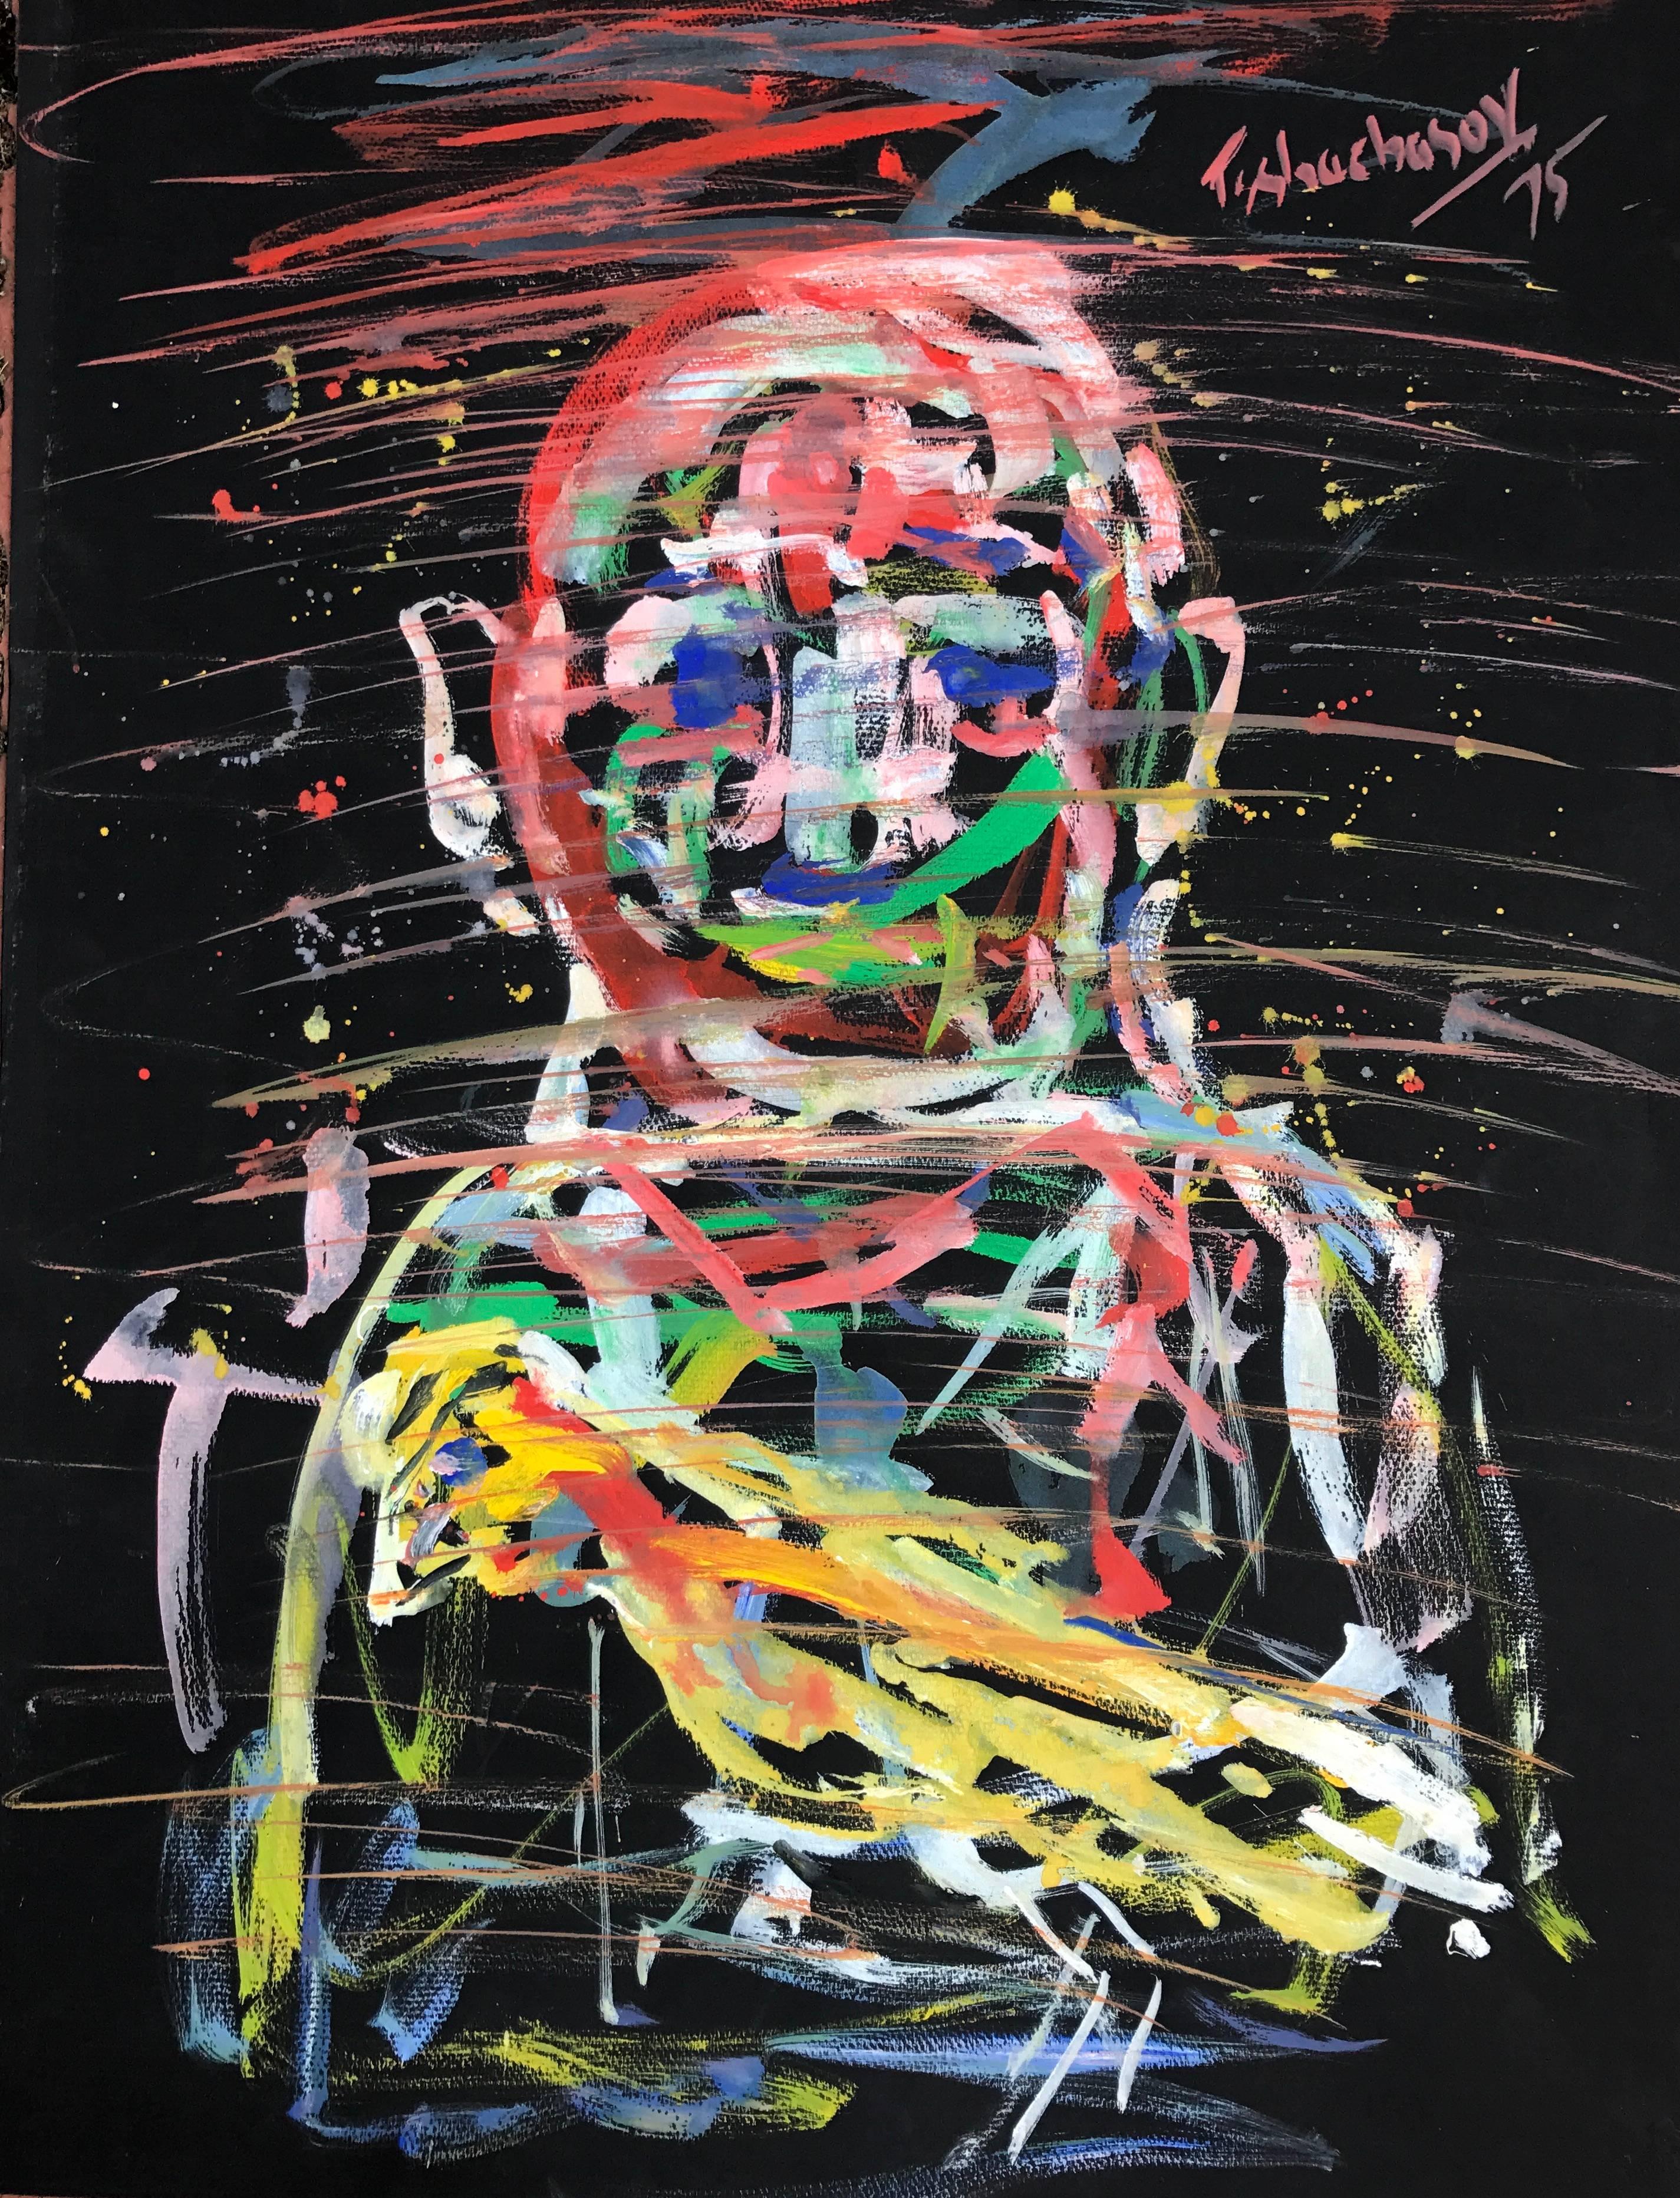 Nahum Tschacbasov Portrait Painting - "Artist Self Portrait"